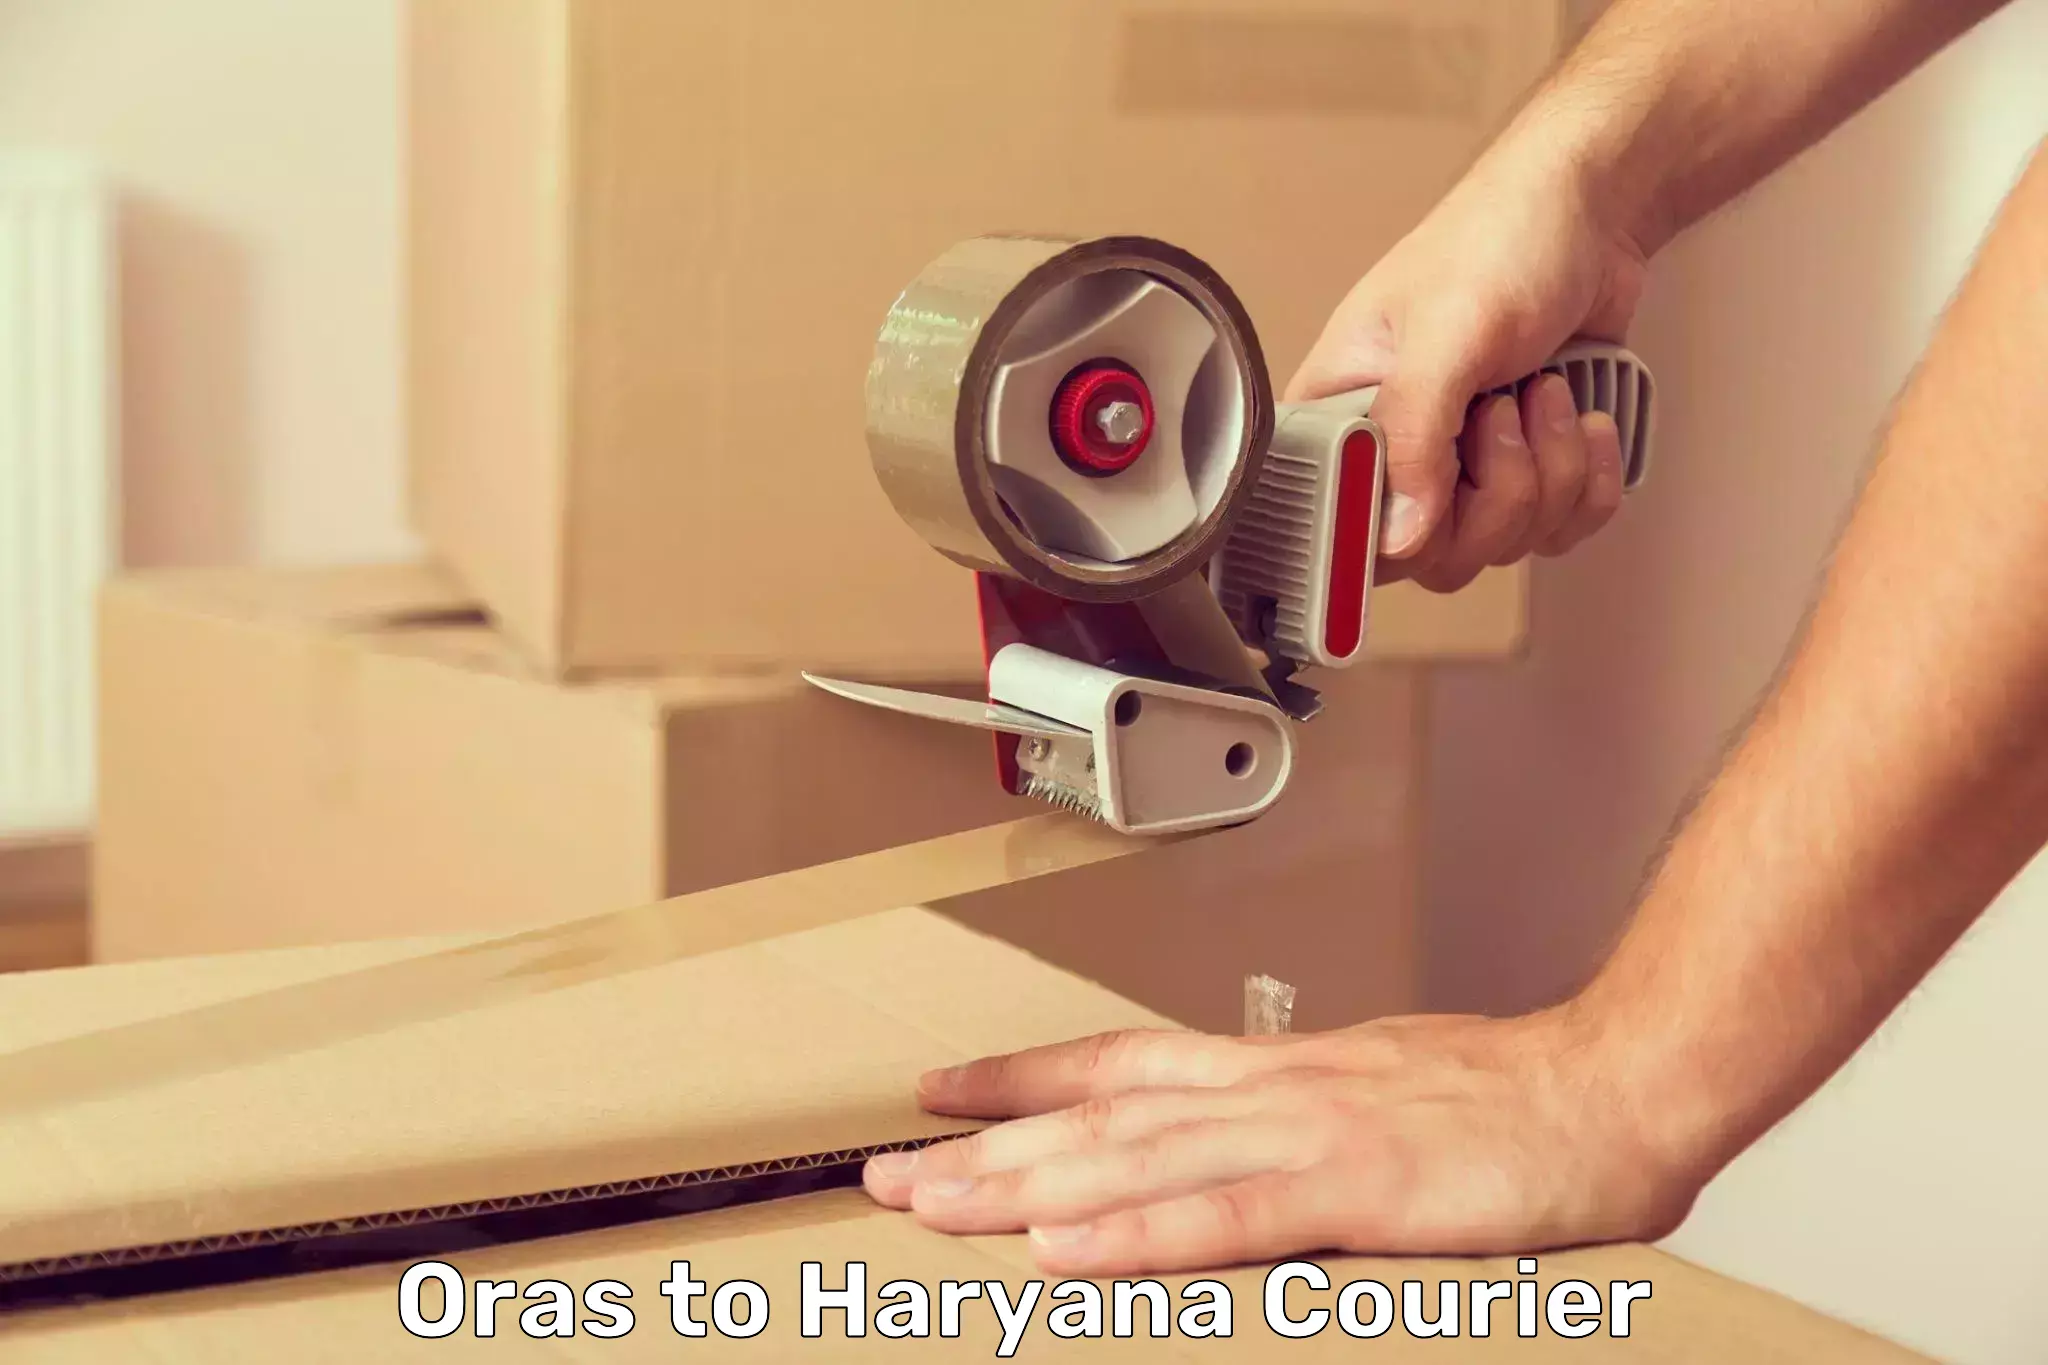 Customer-centric shipping Oras to Haryana